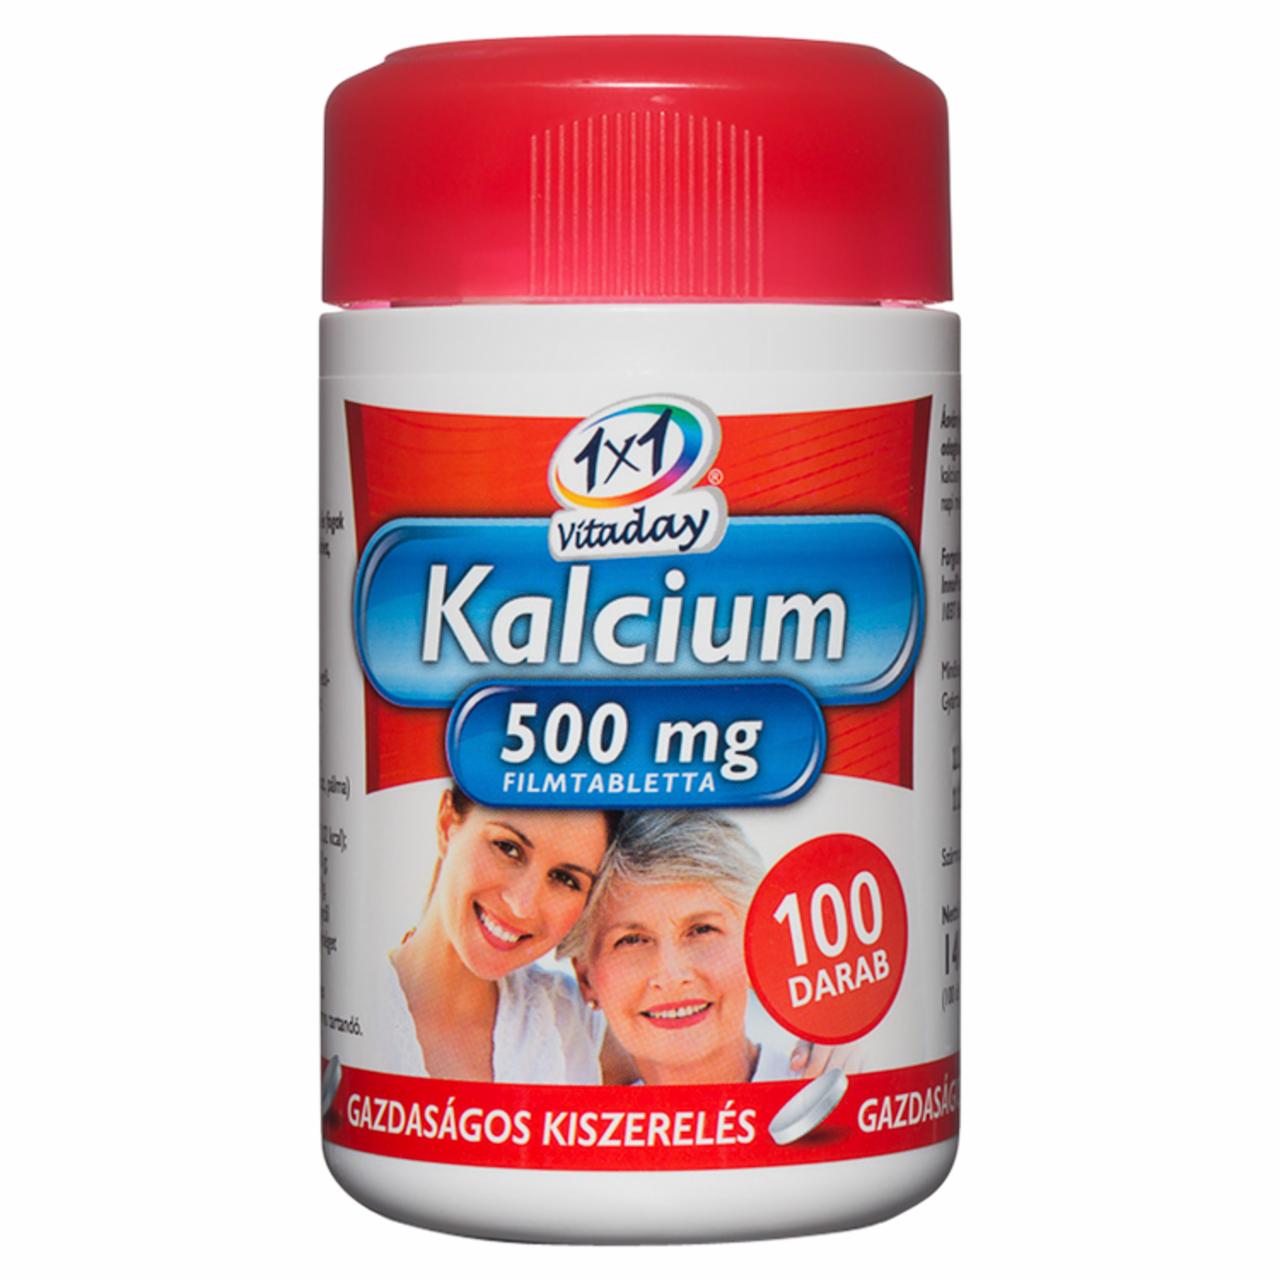 Képek - 1x1 Vitaday Kalcium 500 mg étrend-kiegészítő filmtabletta 100 db 140 g